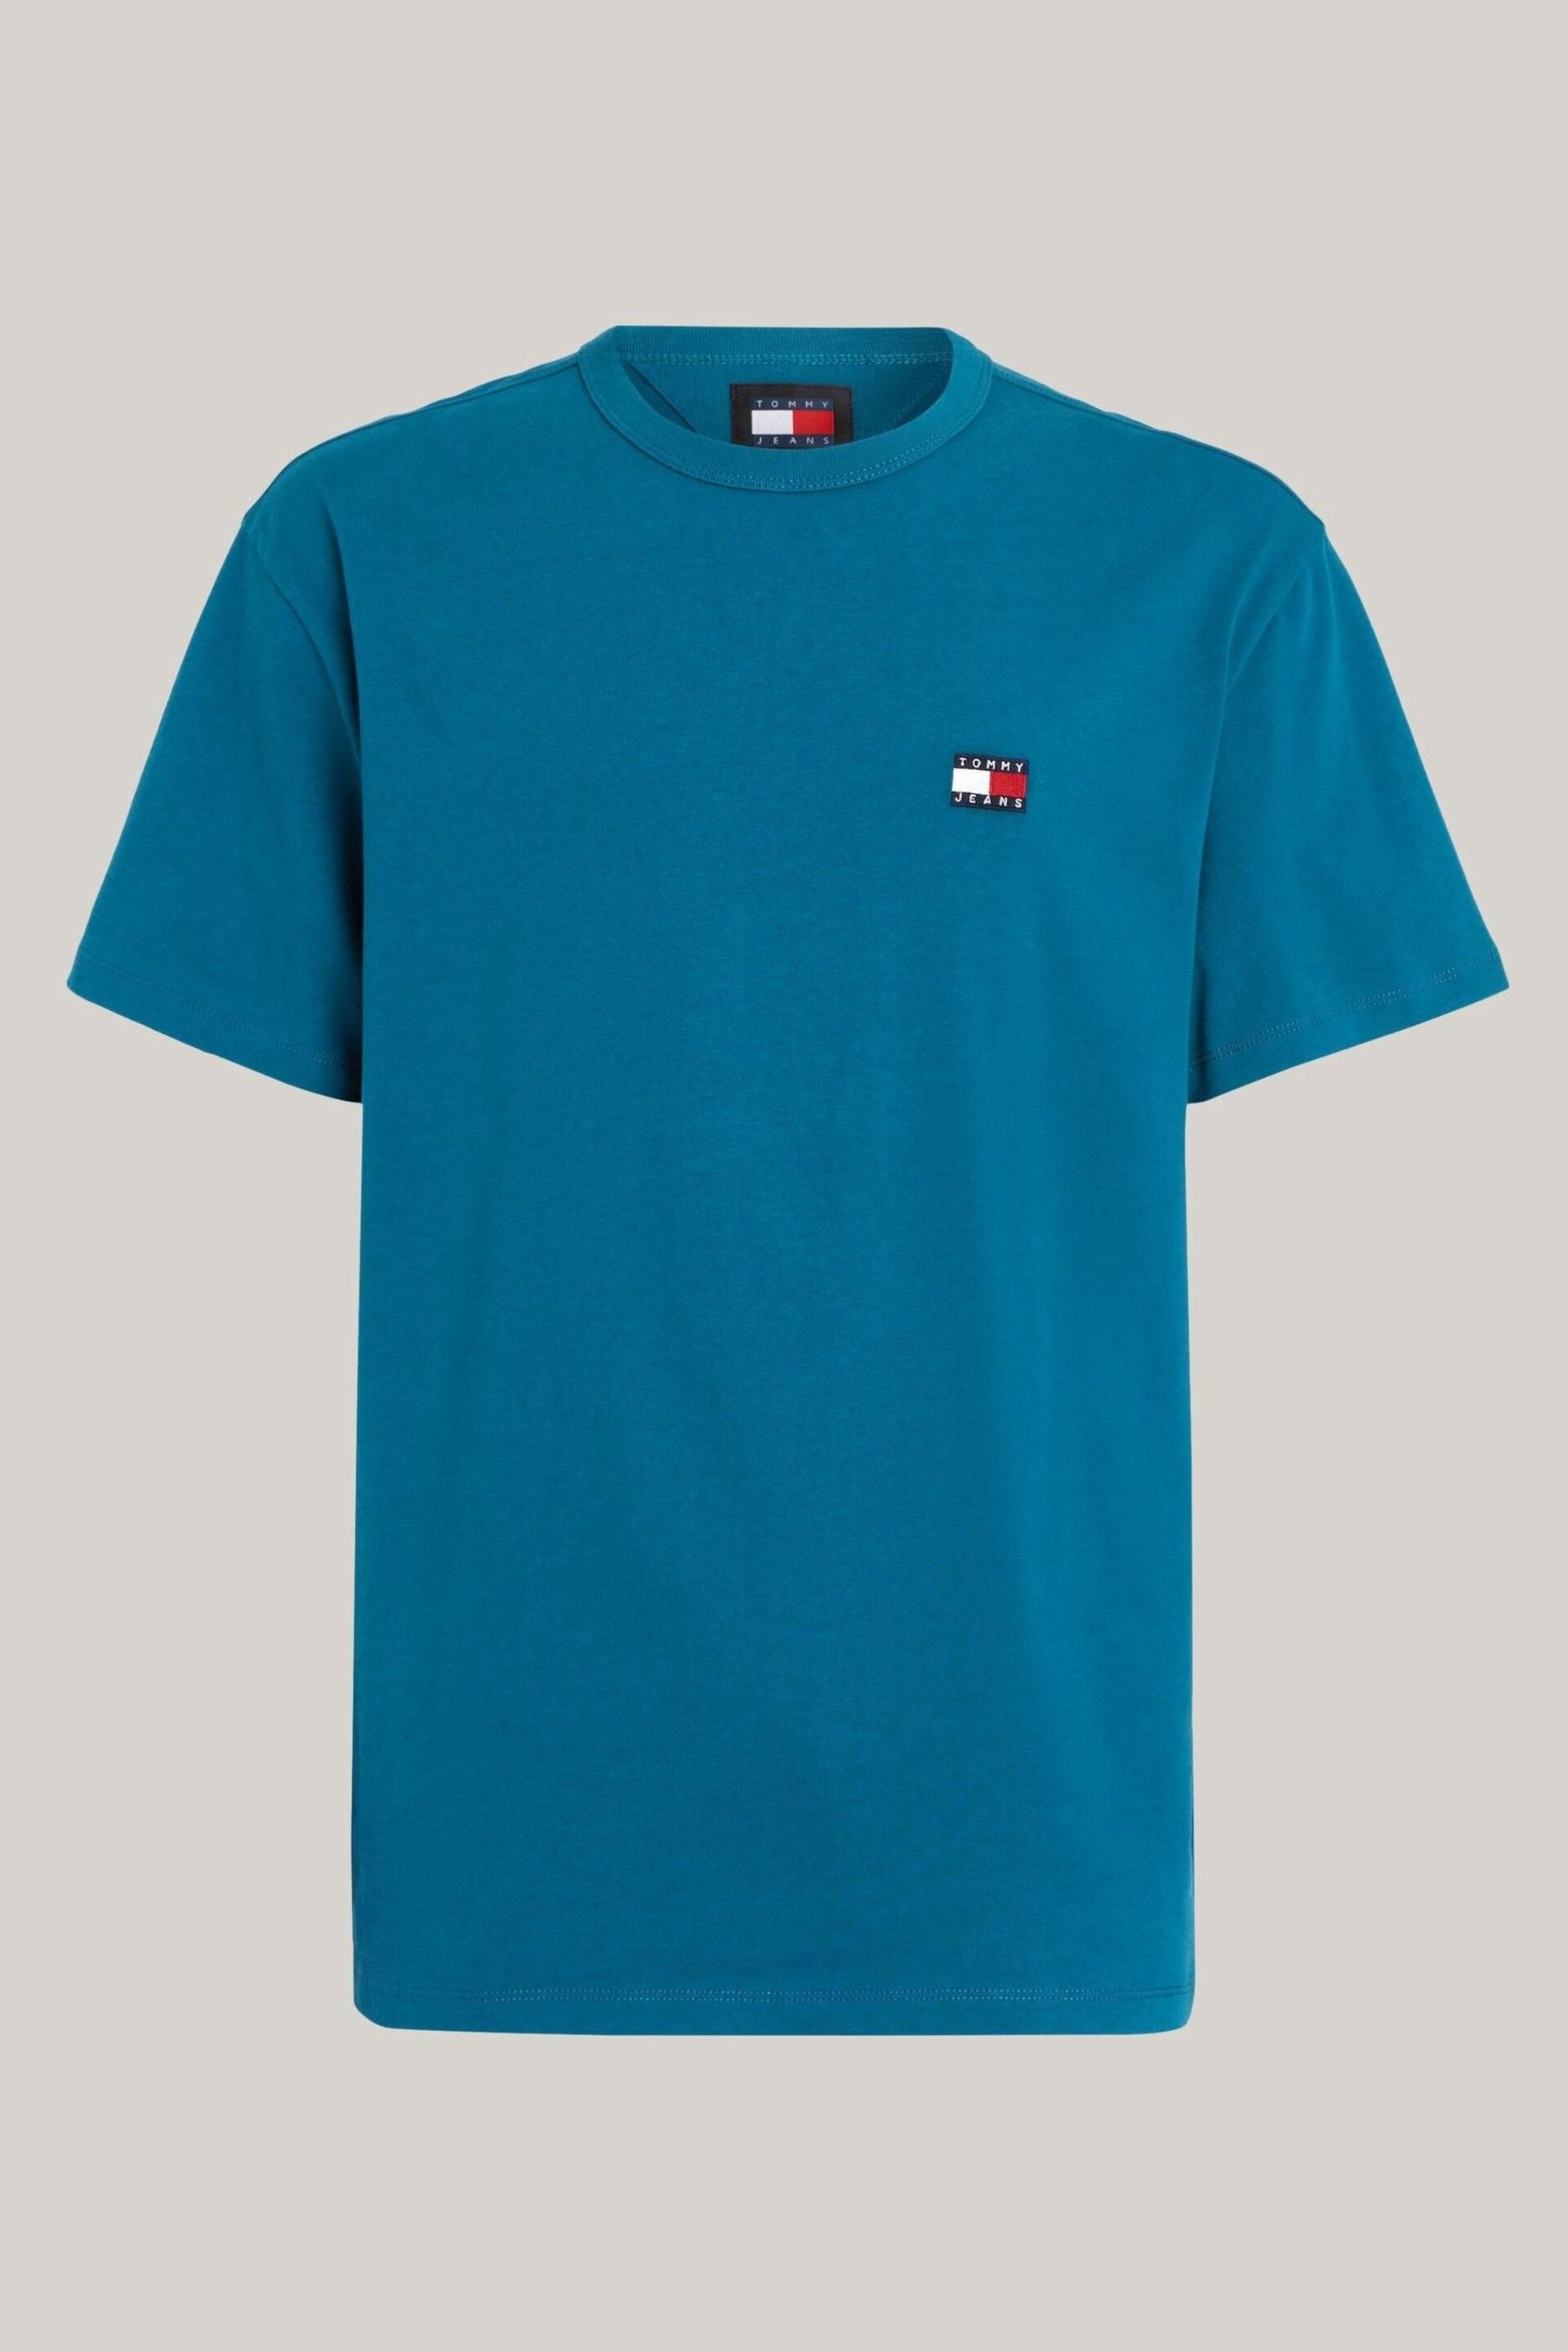 Tommy Jeans Regular Fit Badge T-Shirt - Image 5 of 5